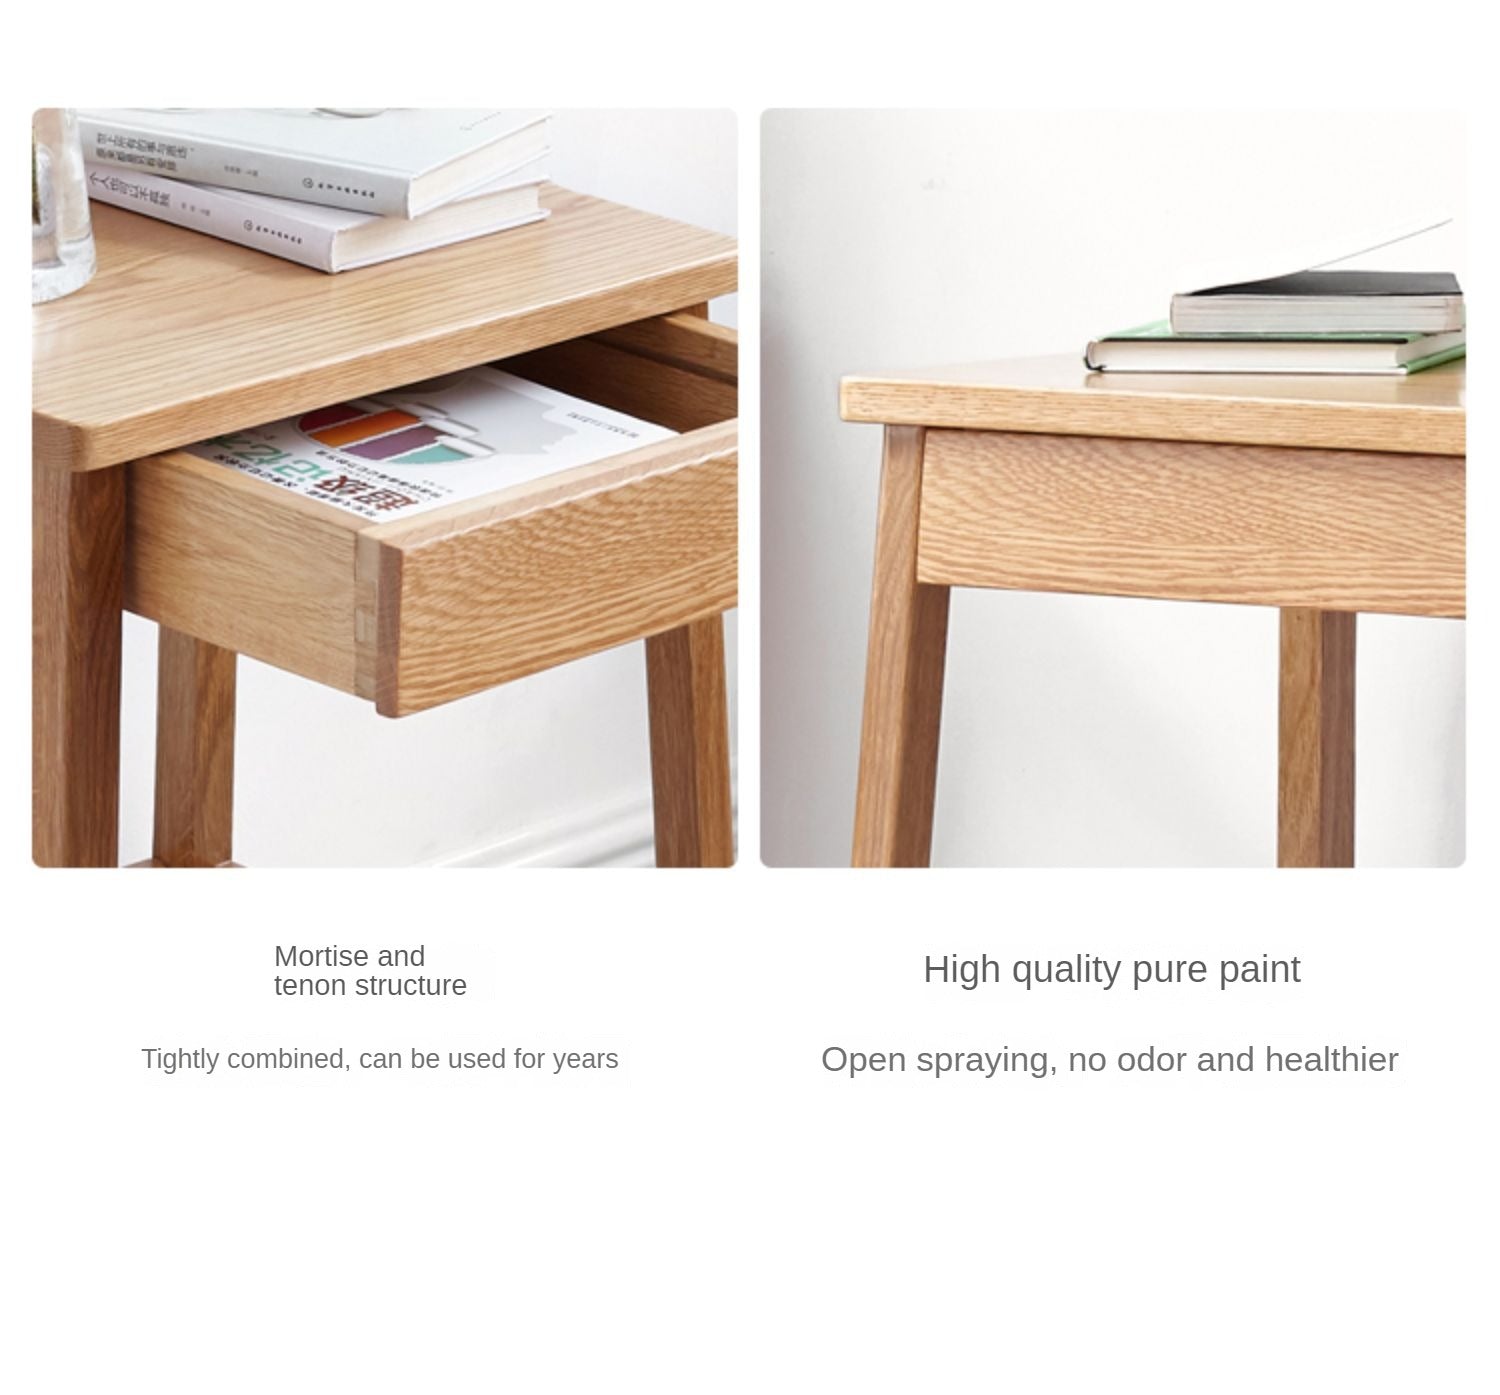 Oak Solid wood side tabledouble-layer"